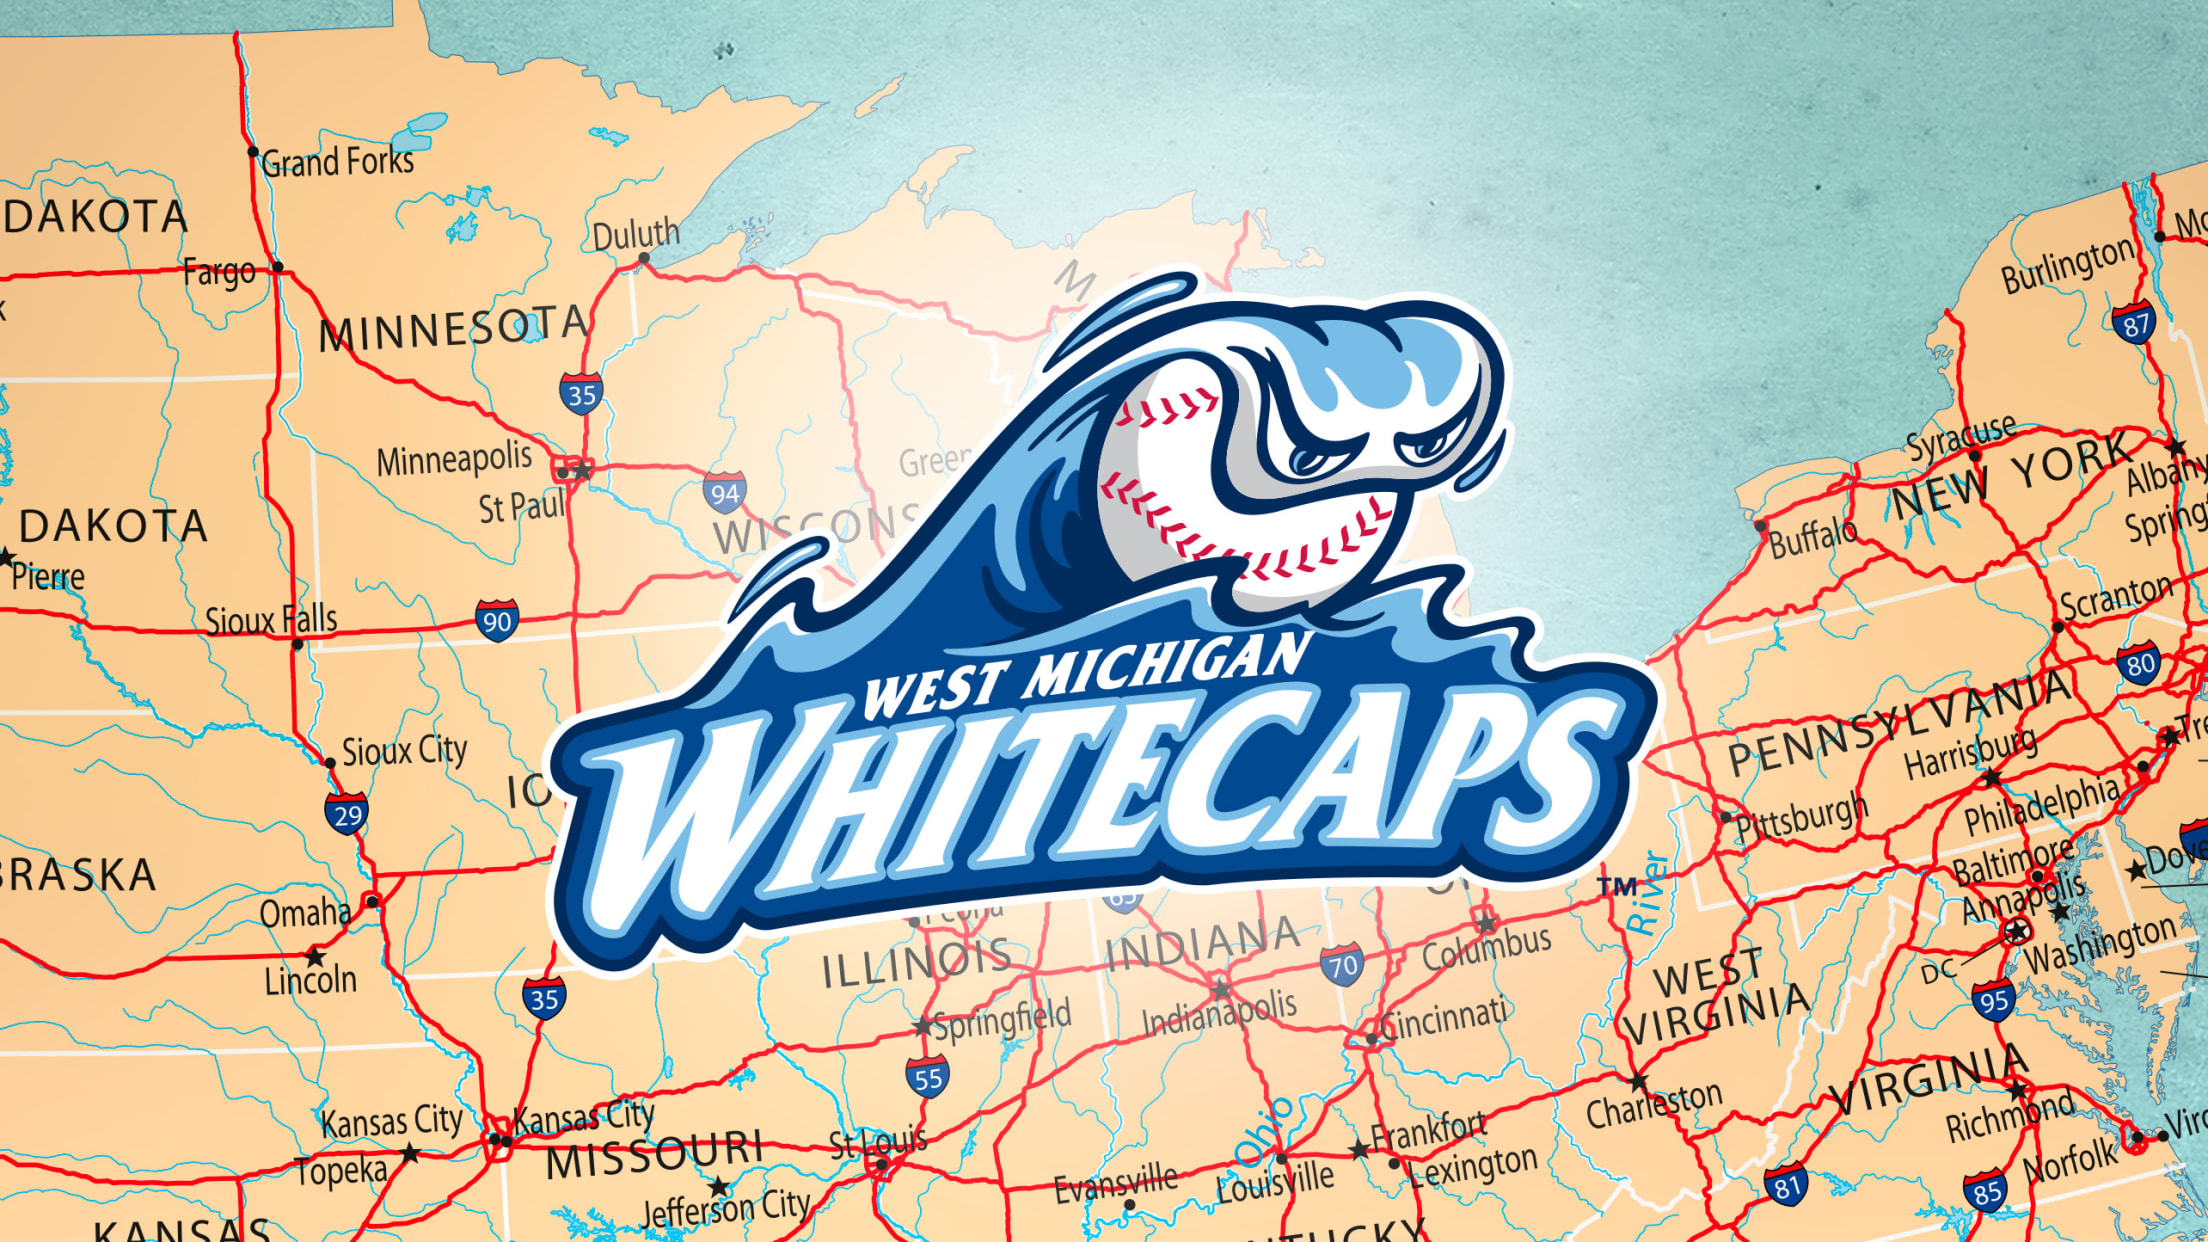 LMCU Ballpark - Home of the West Michigan Whitecaps - Comstock Park MI,  49321